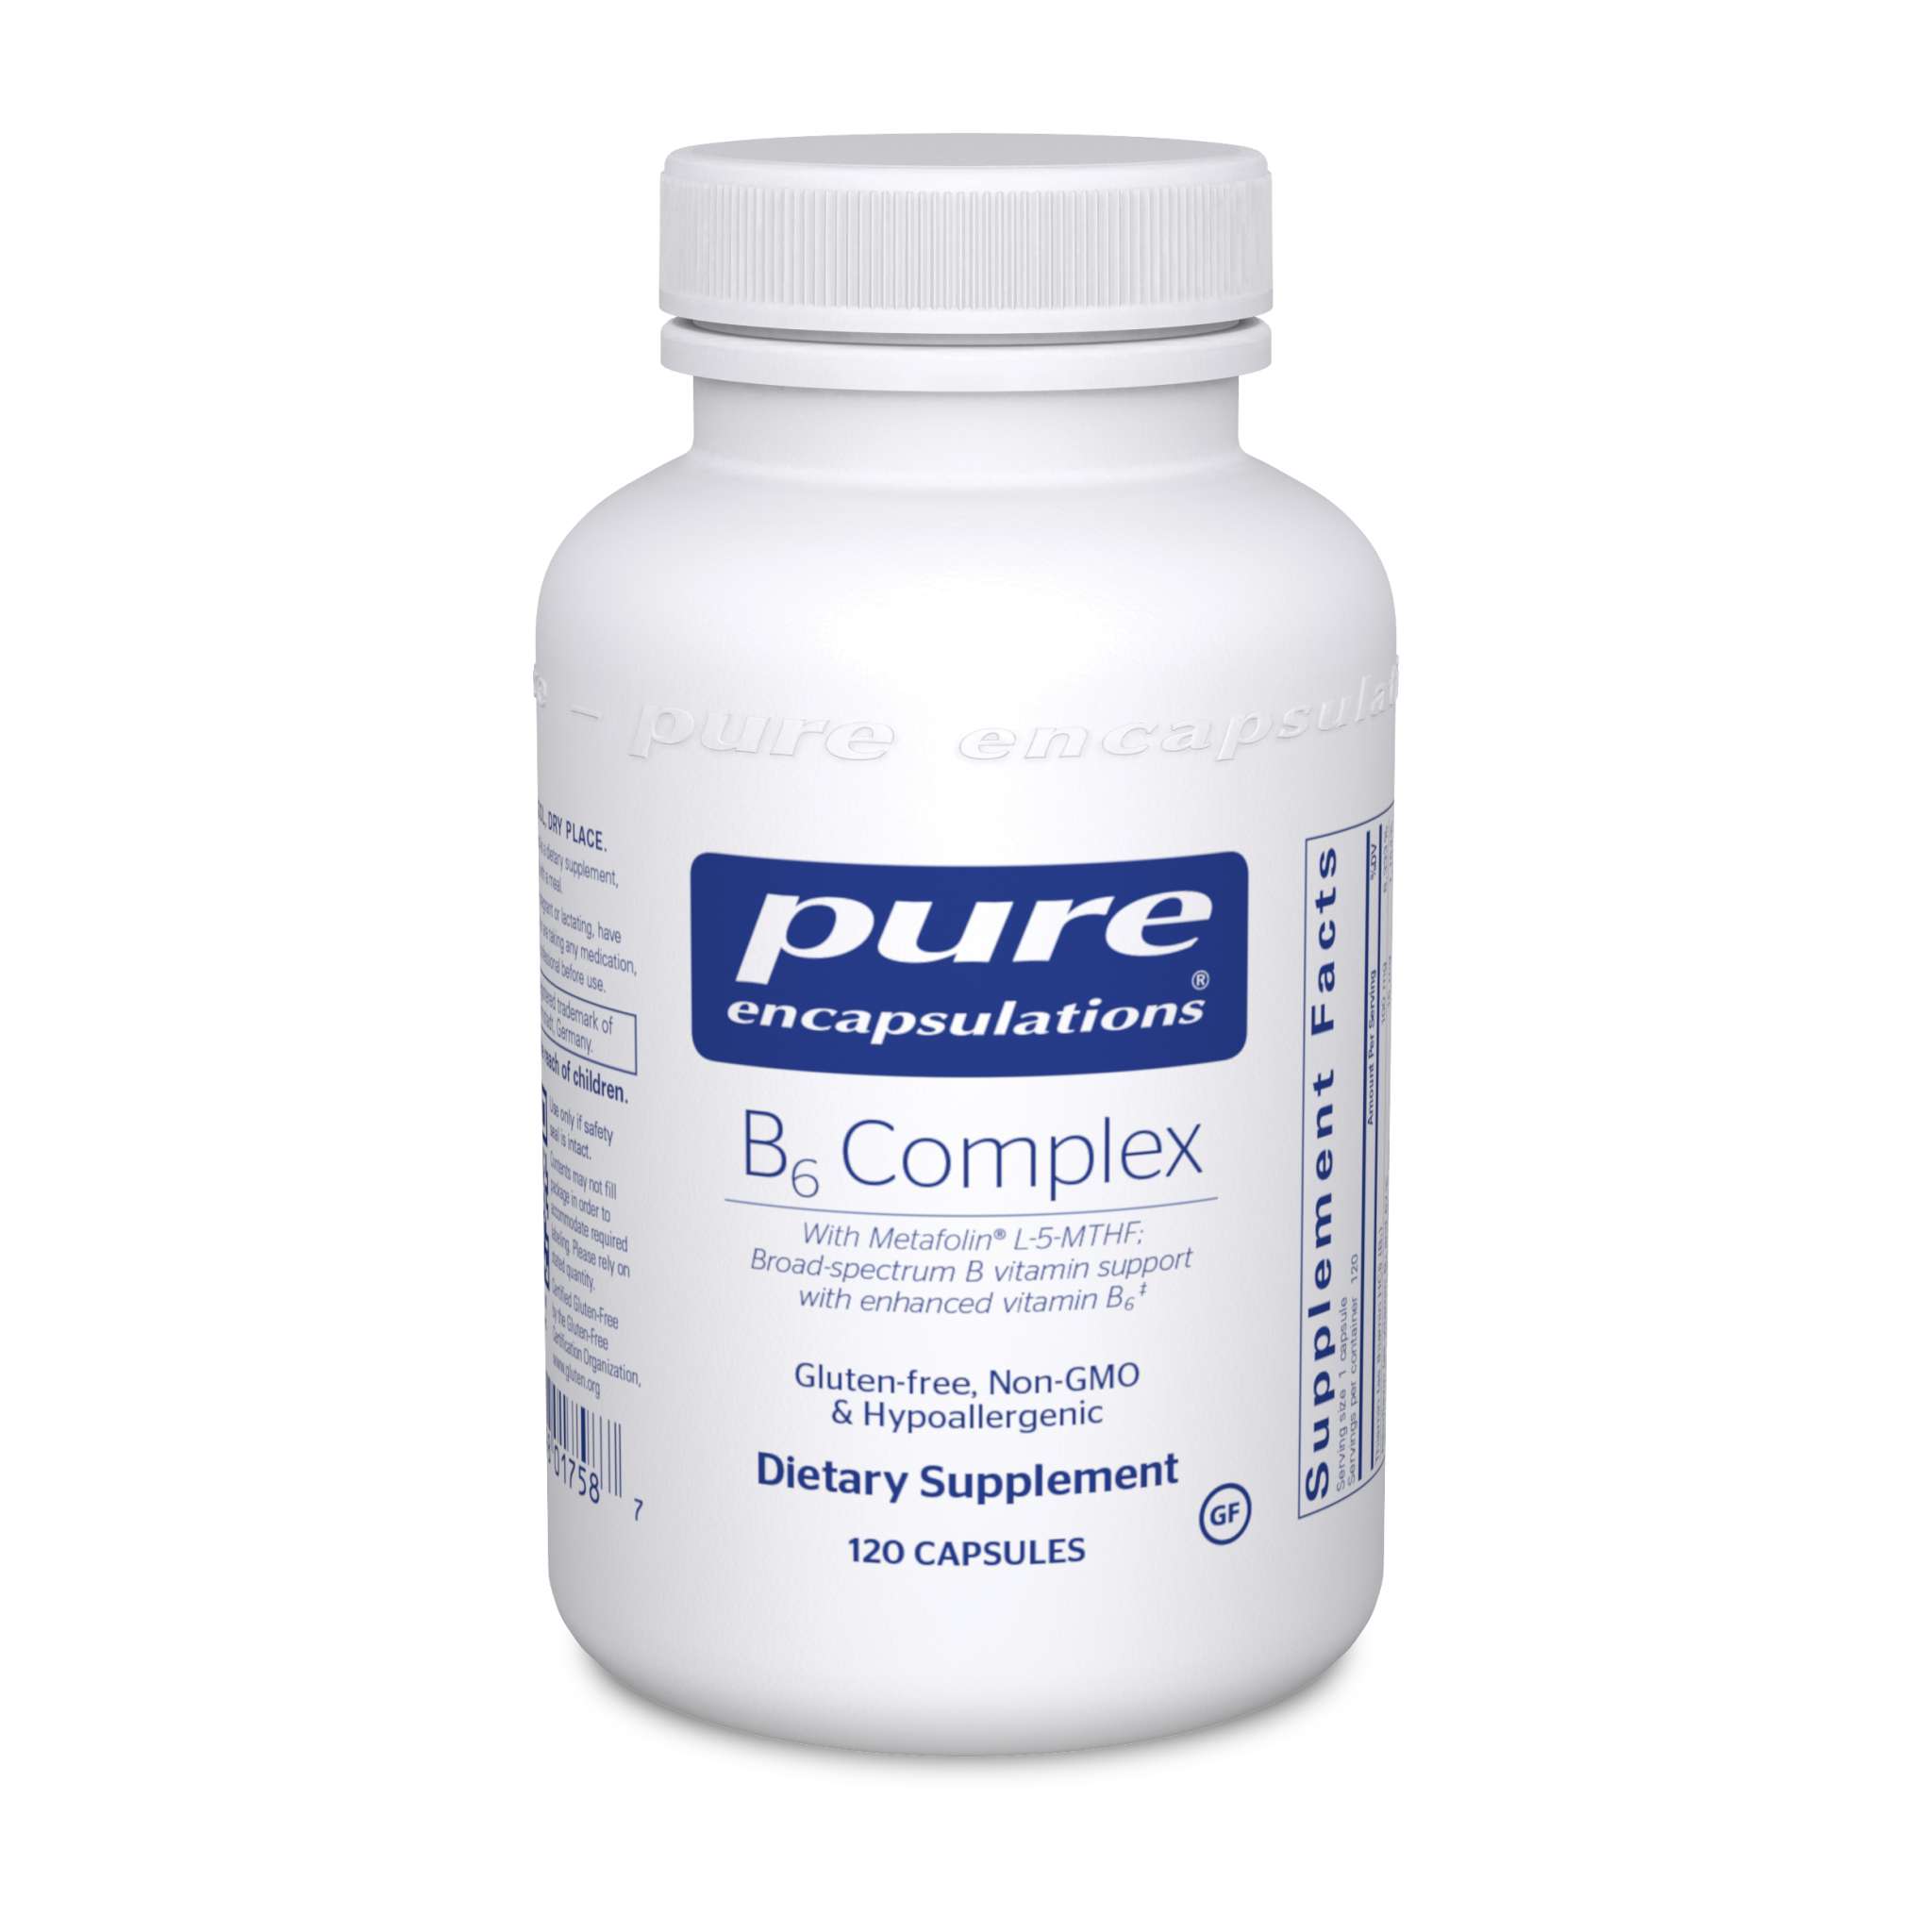 Pure Encapsulations - B6 Complex